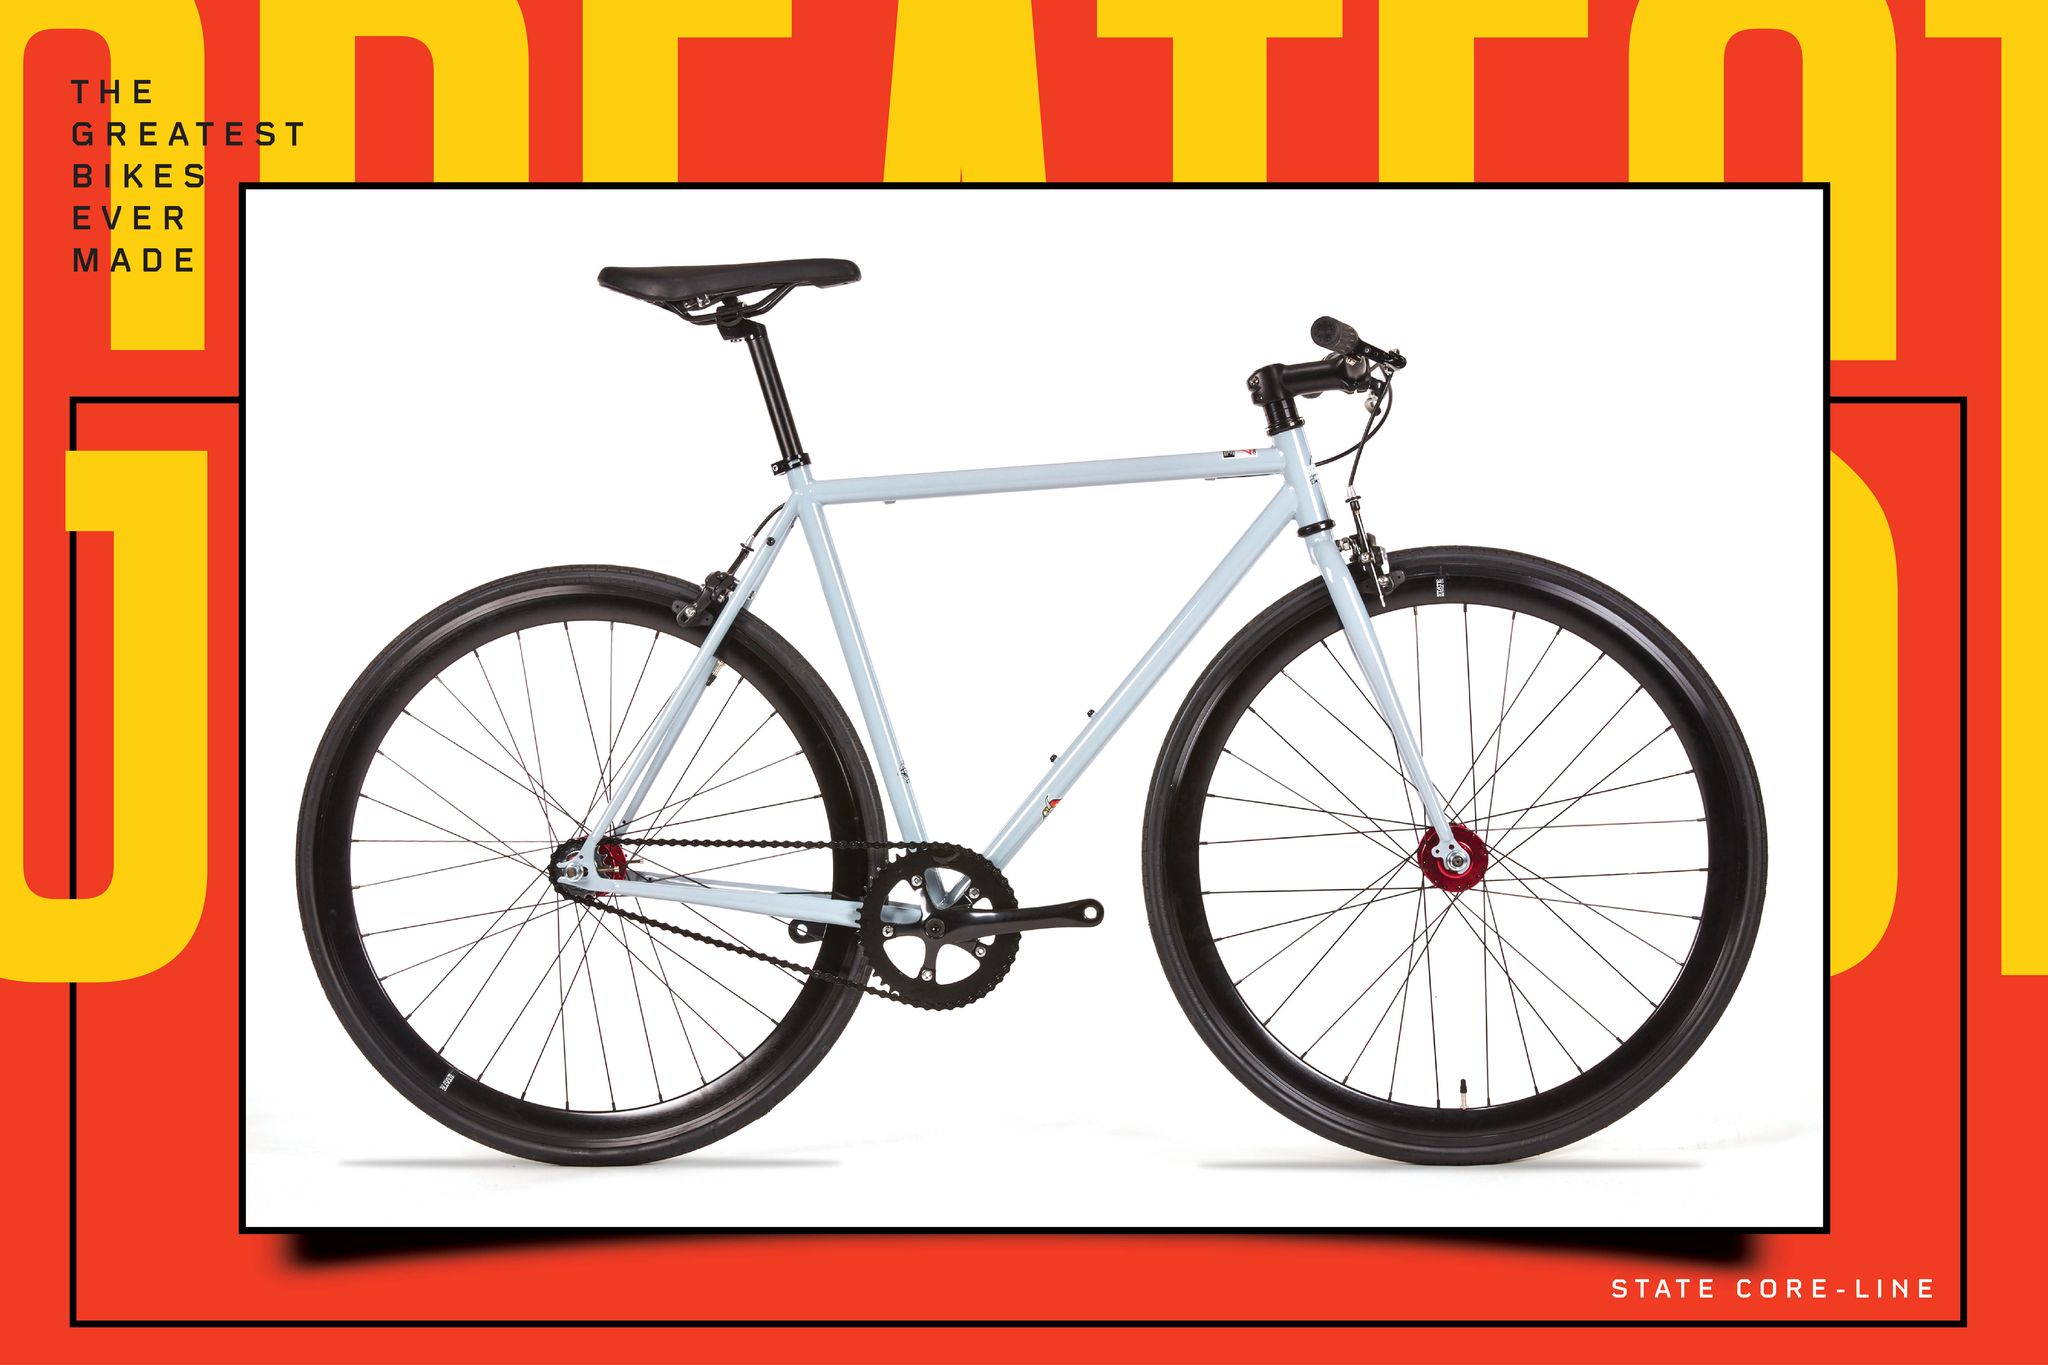 Bicycle wheel, Bicycle frame, Bicycle part, Bicycle, Bicycle tire, Bicycle handlebar, Bicycle fork, Vehicle, Hybrid bicycle, Bicycles--Equipment and supplies, 